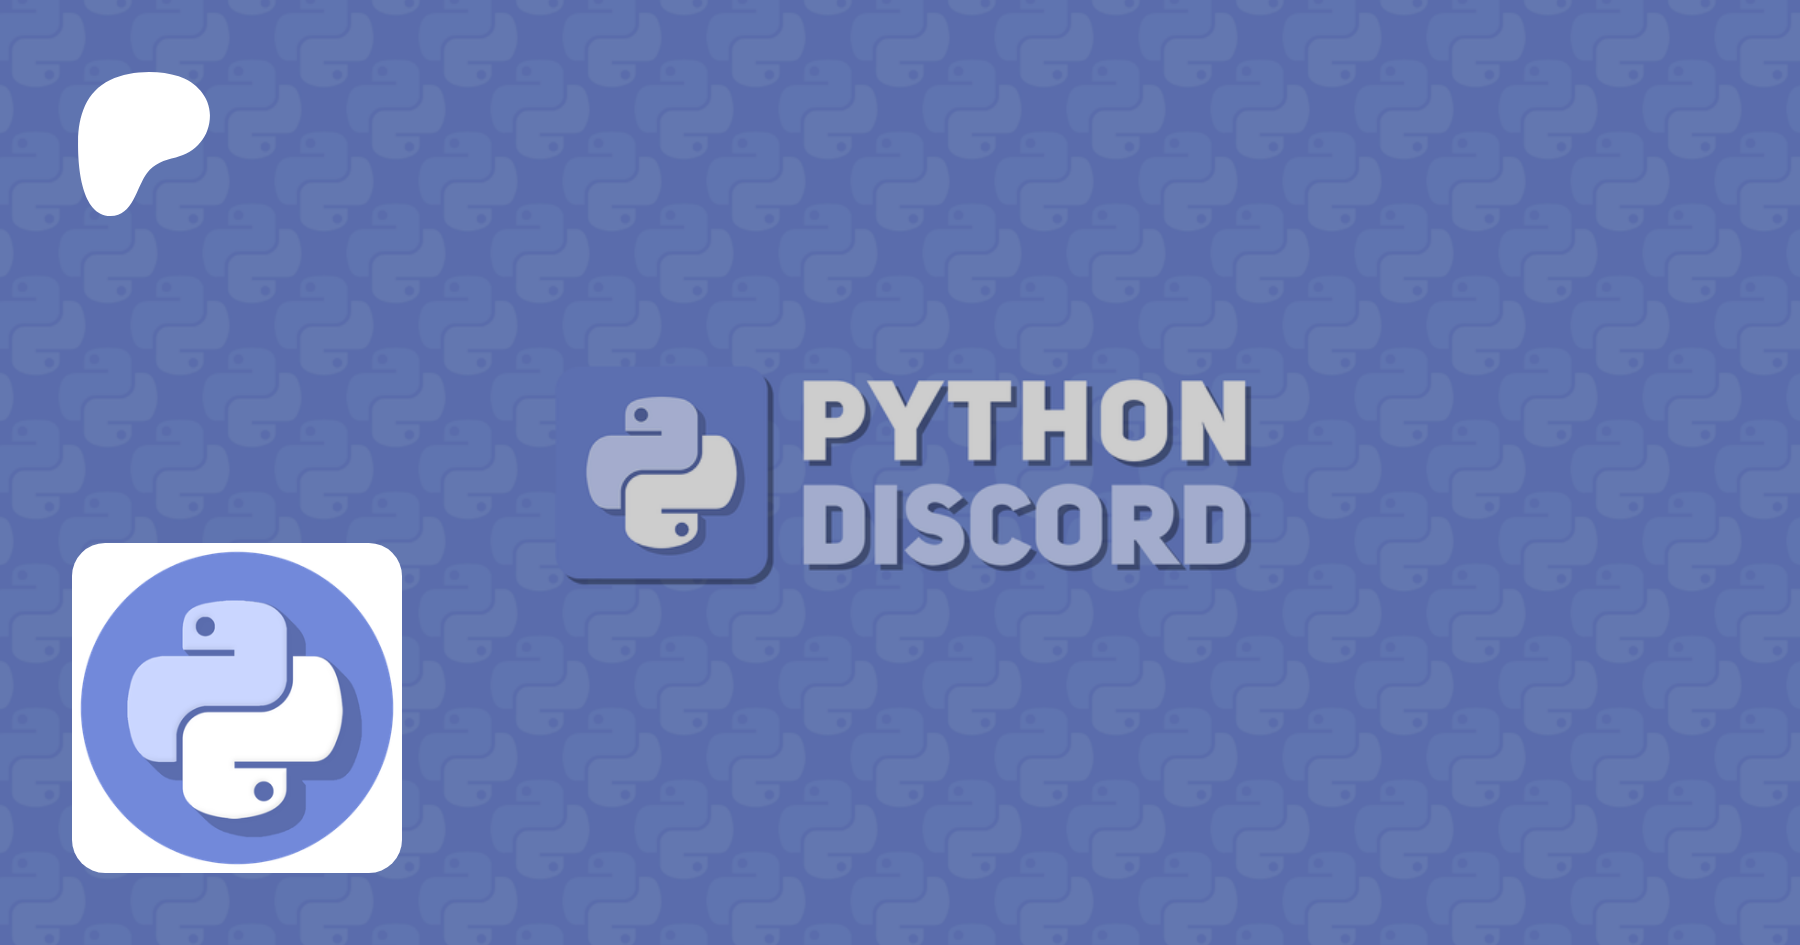 Python Discord Pixels: Summer 2021